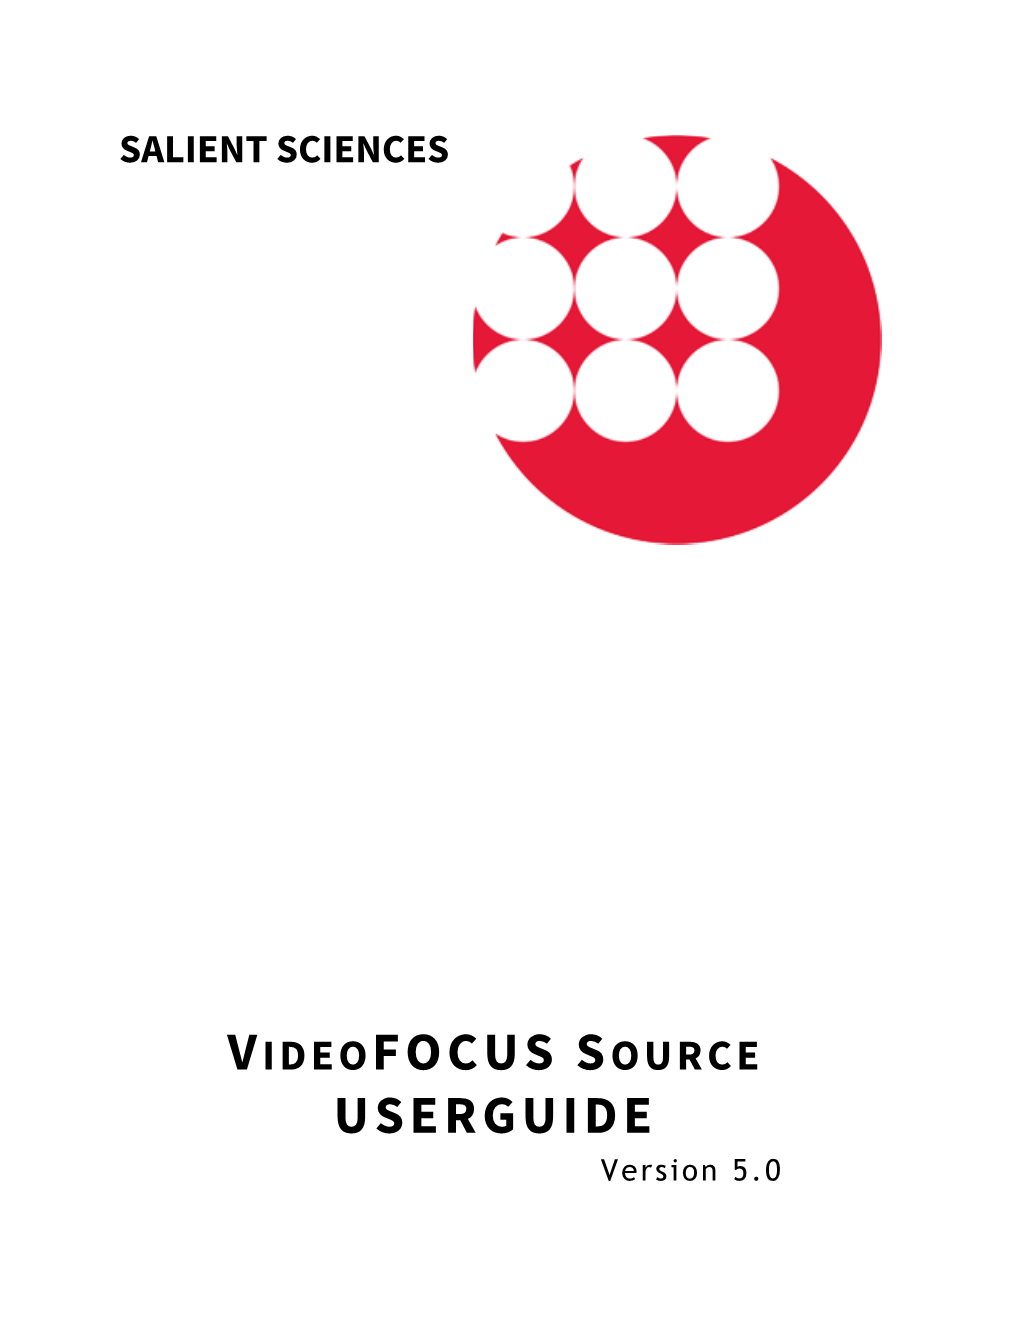 VIDEOFOCUS SOURCE USERGUIDE Version 5.0 © 2001-2015 DIGITAL AUDIO CORPORATION